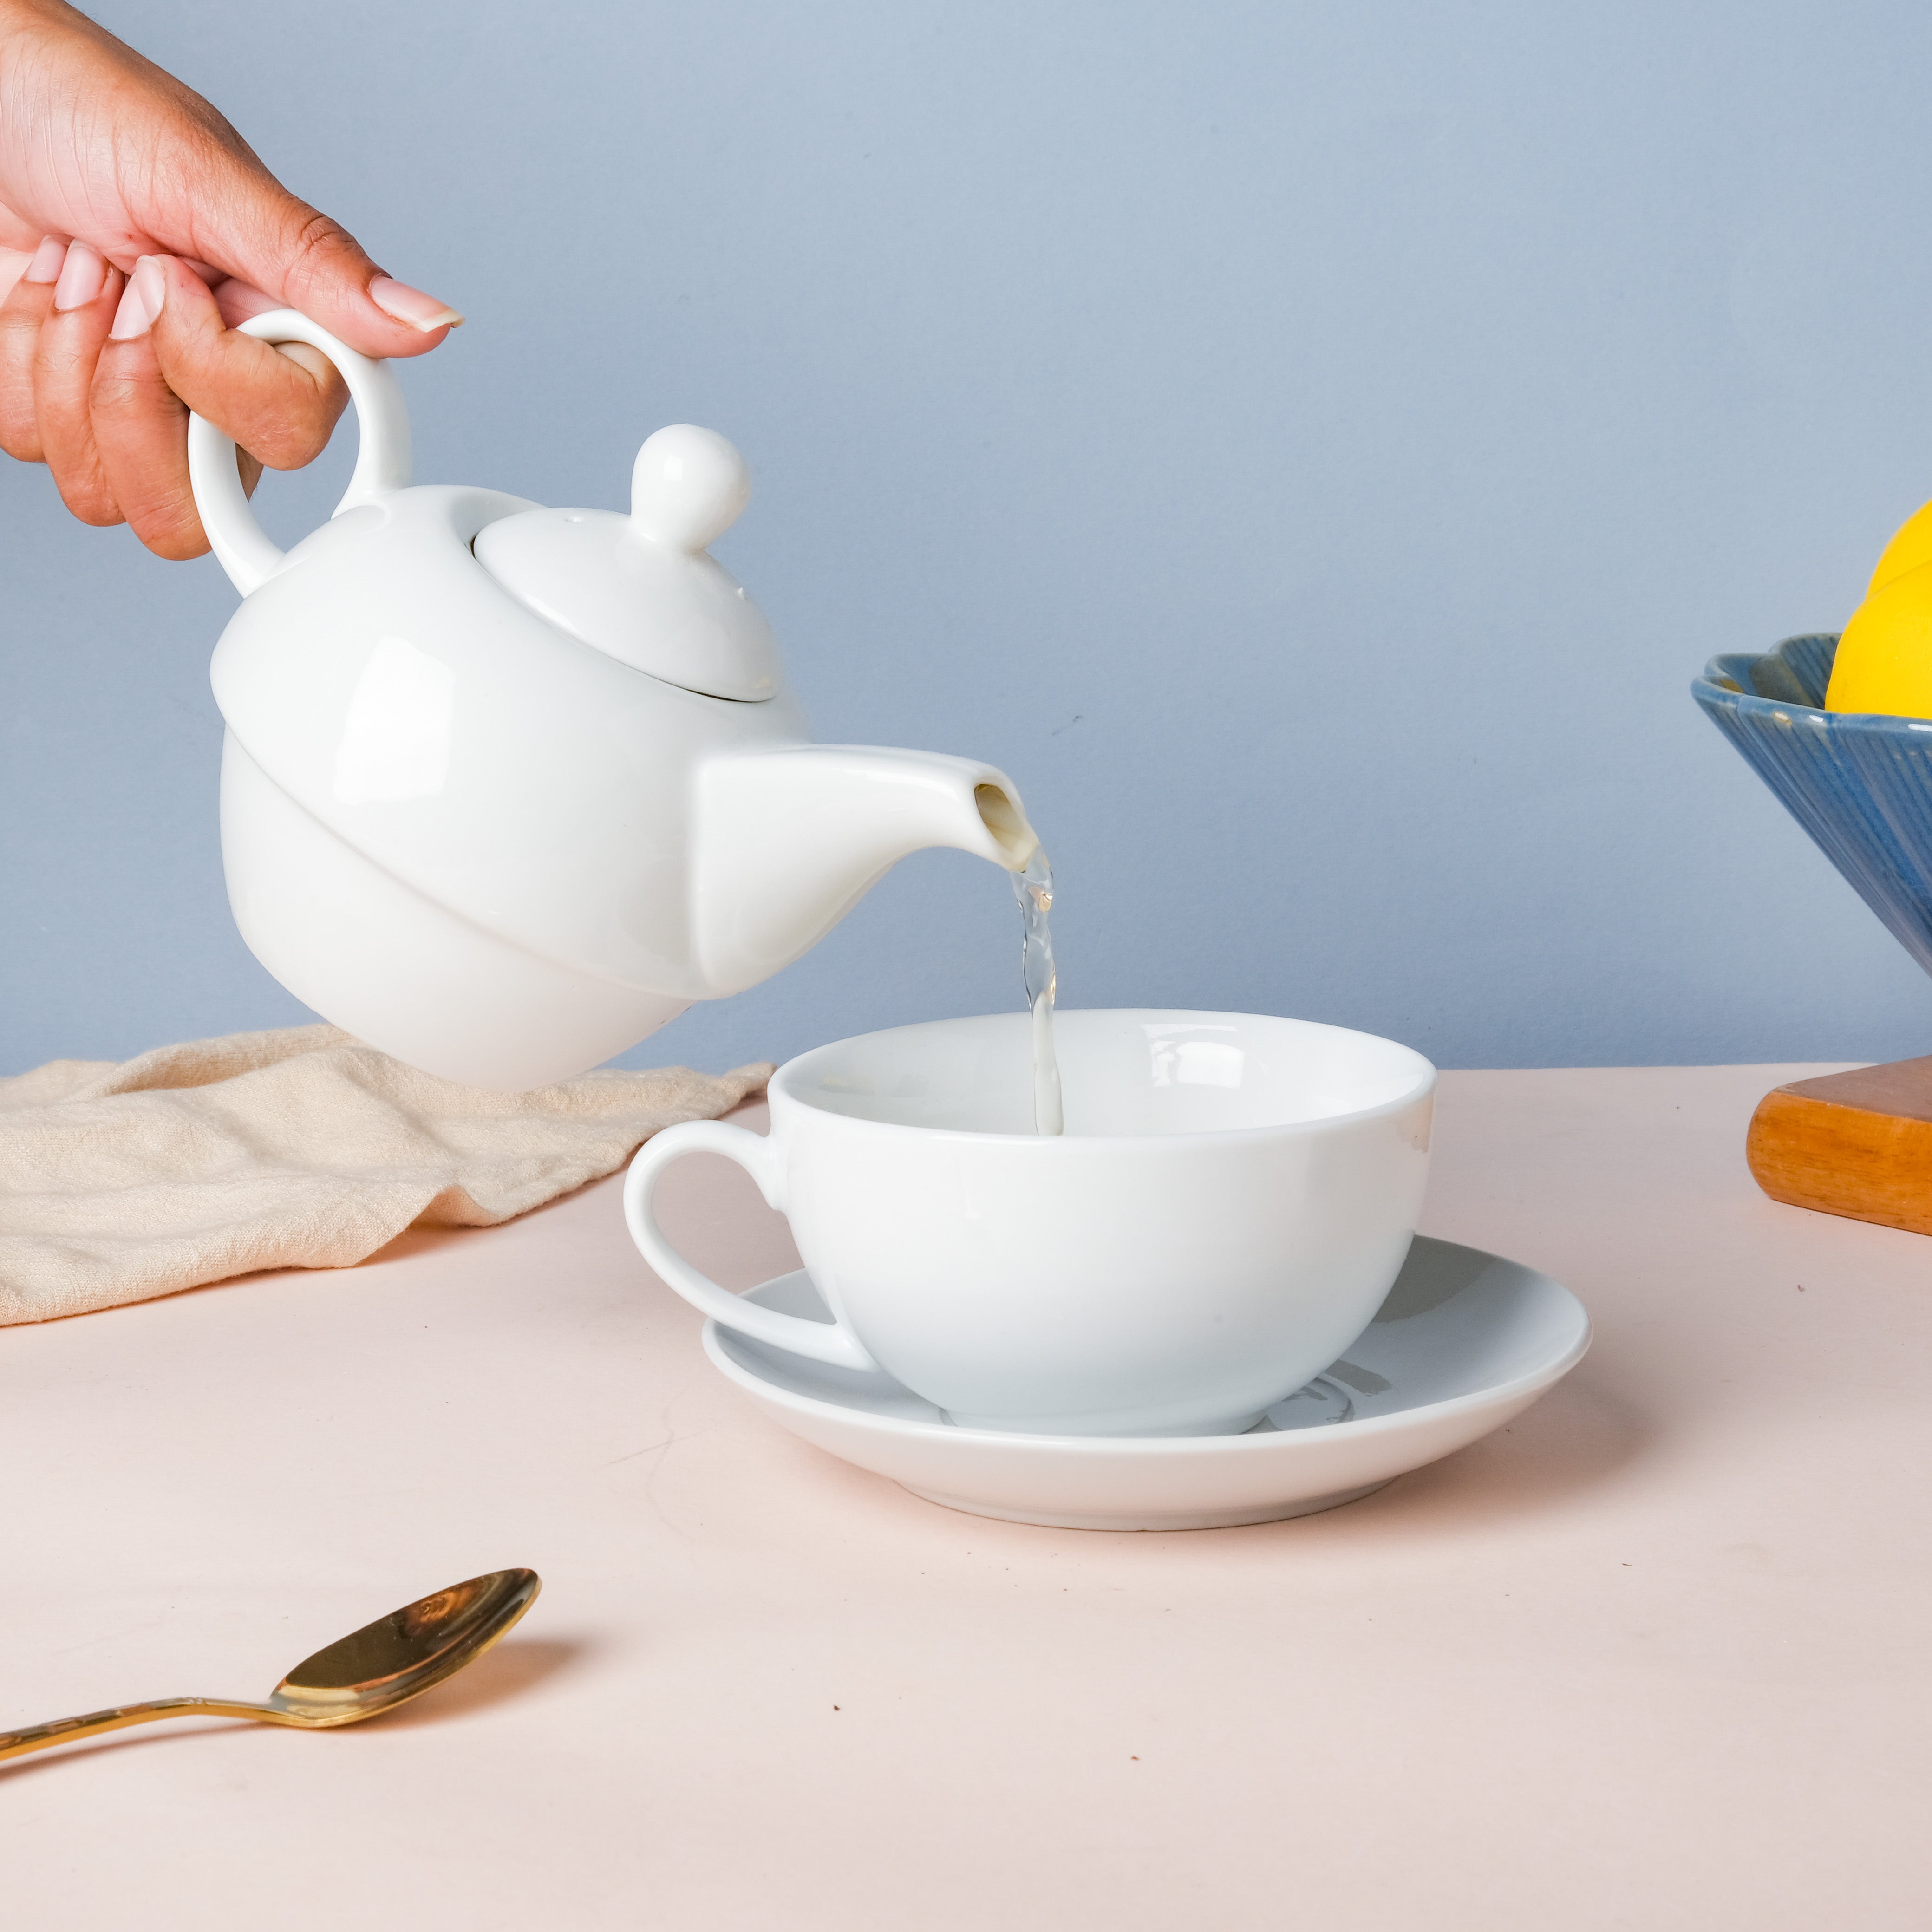 Teapot Set for One - Tea cup set, tea set, teapot set | Tea set for Dining Table & Home Decor